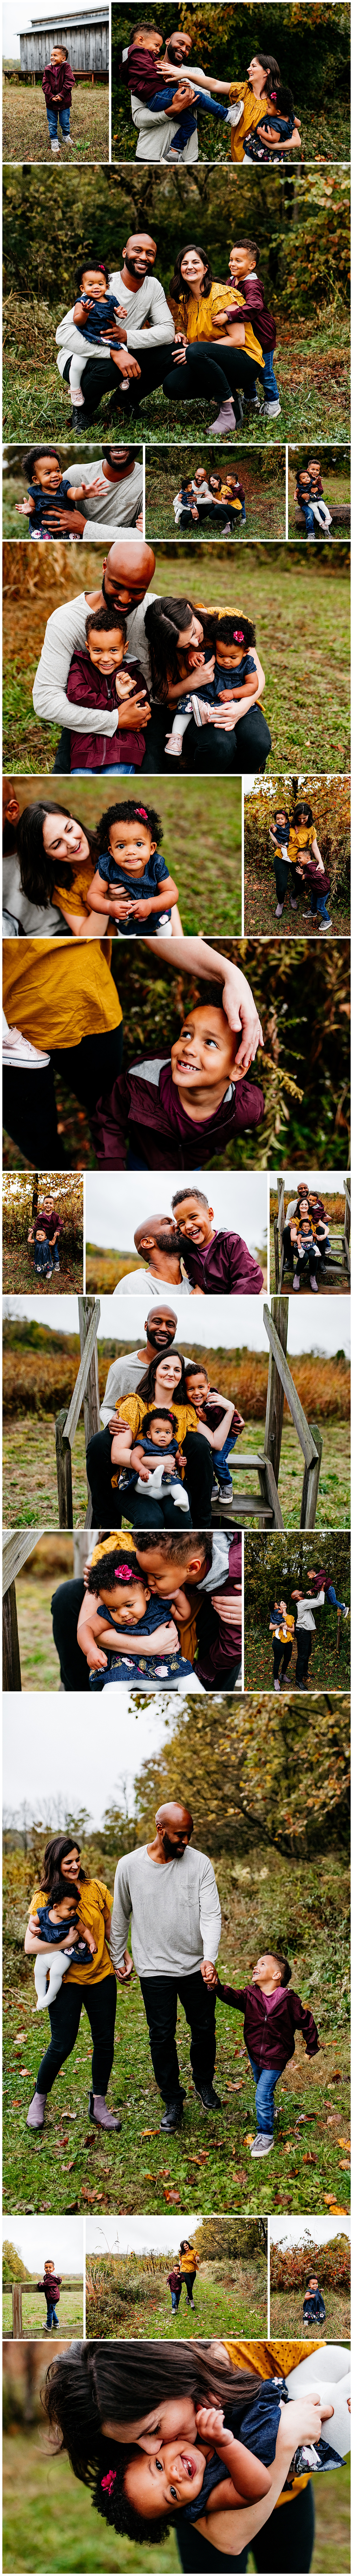 Cincinnati Family Photo Session: